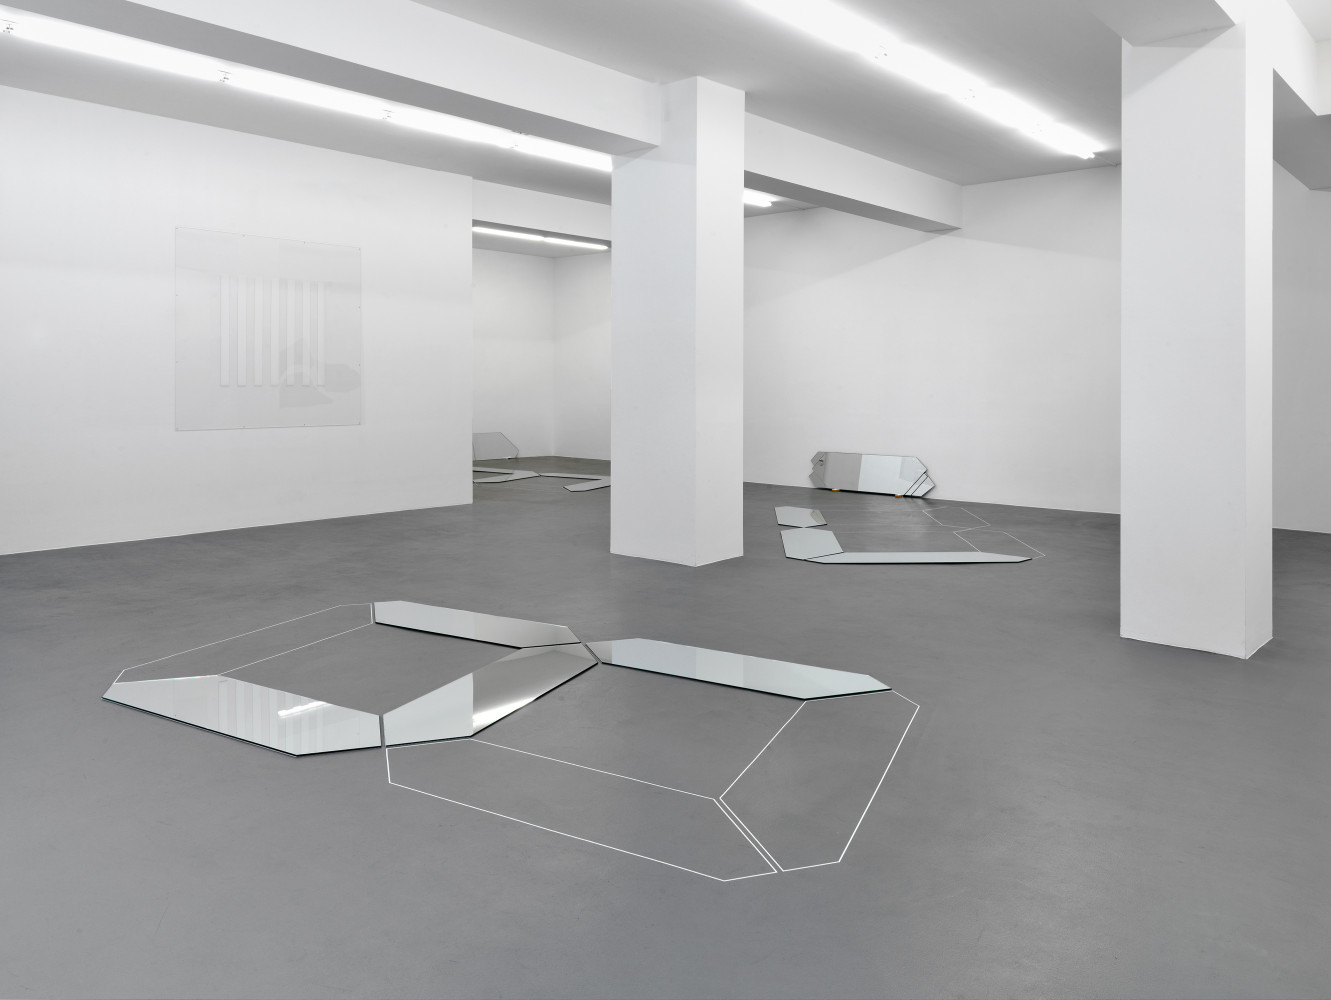 ‘Daniel Buren, Tony Cragg, Tatsuo Miyajima’, Installation view, Buchmann Galerie, 2012